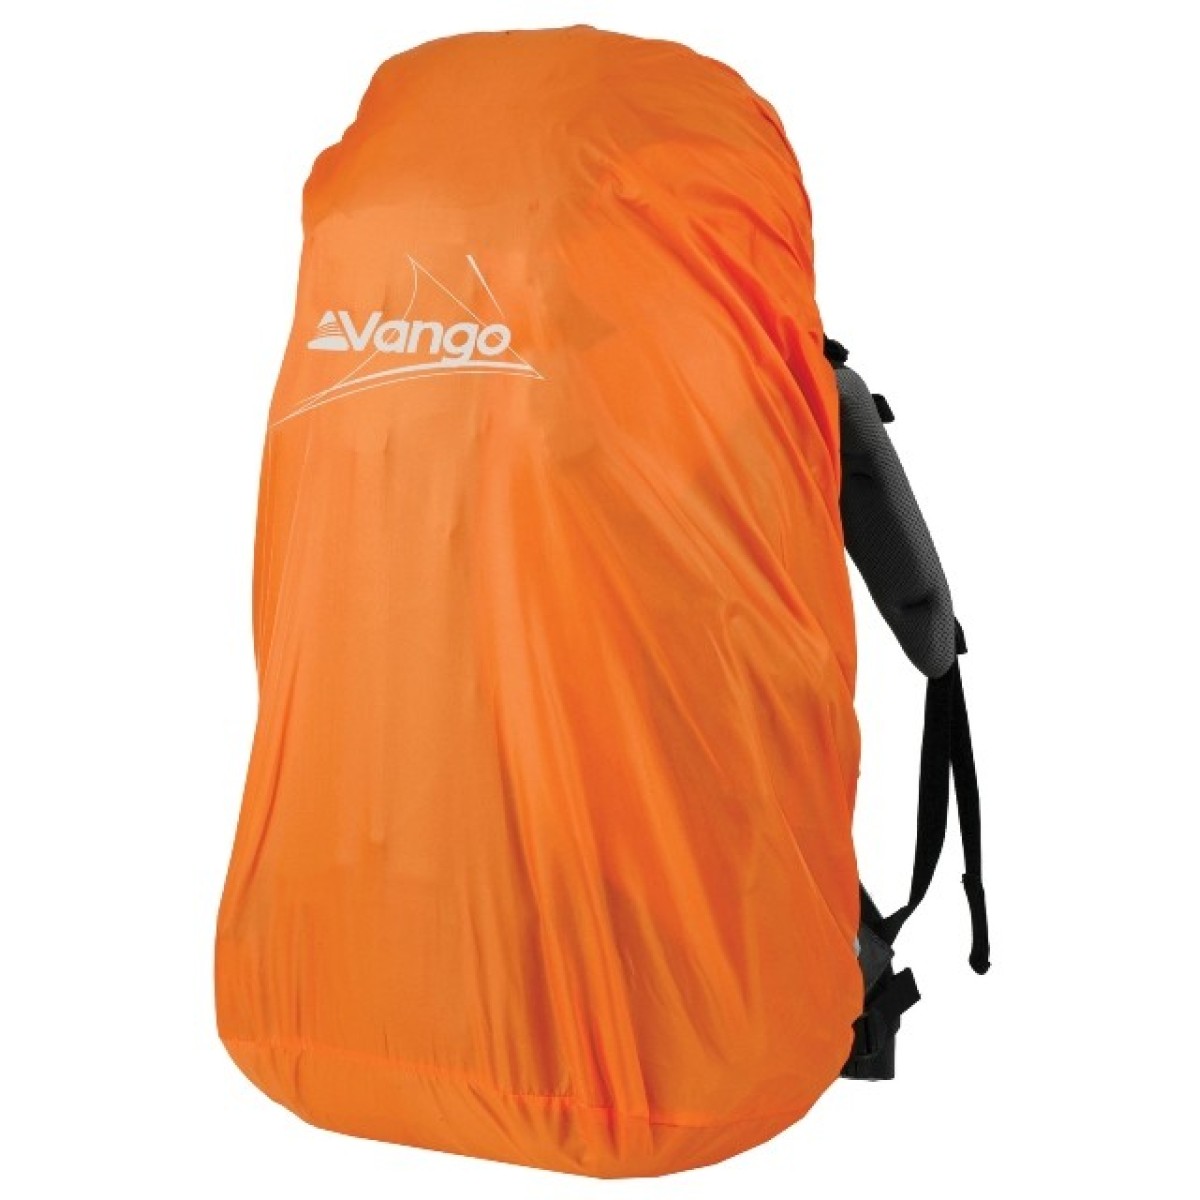 Vango Backpack Raincover M 40-55L VANGO - view 1